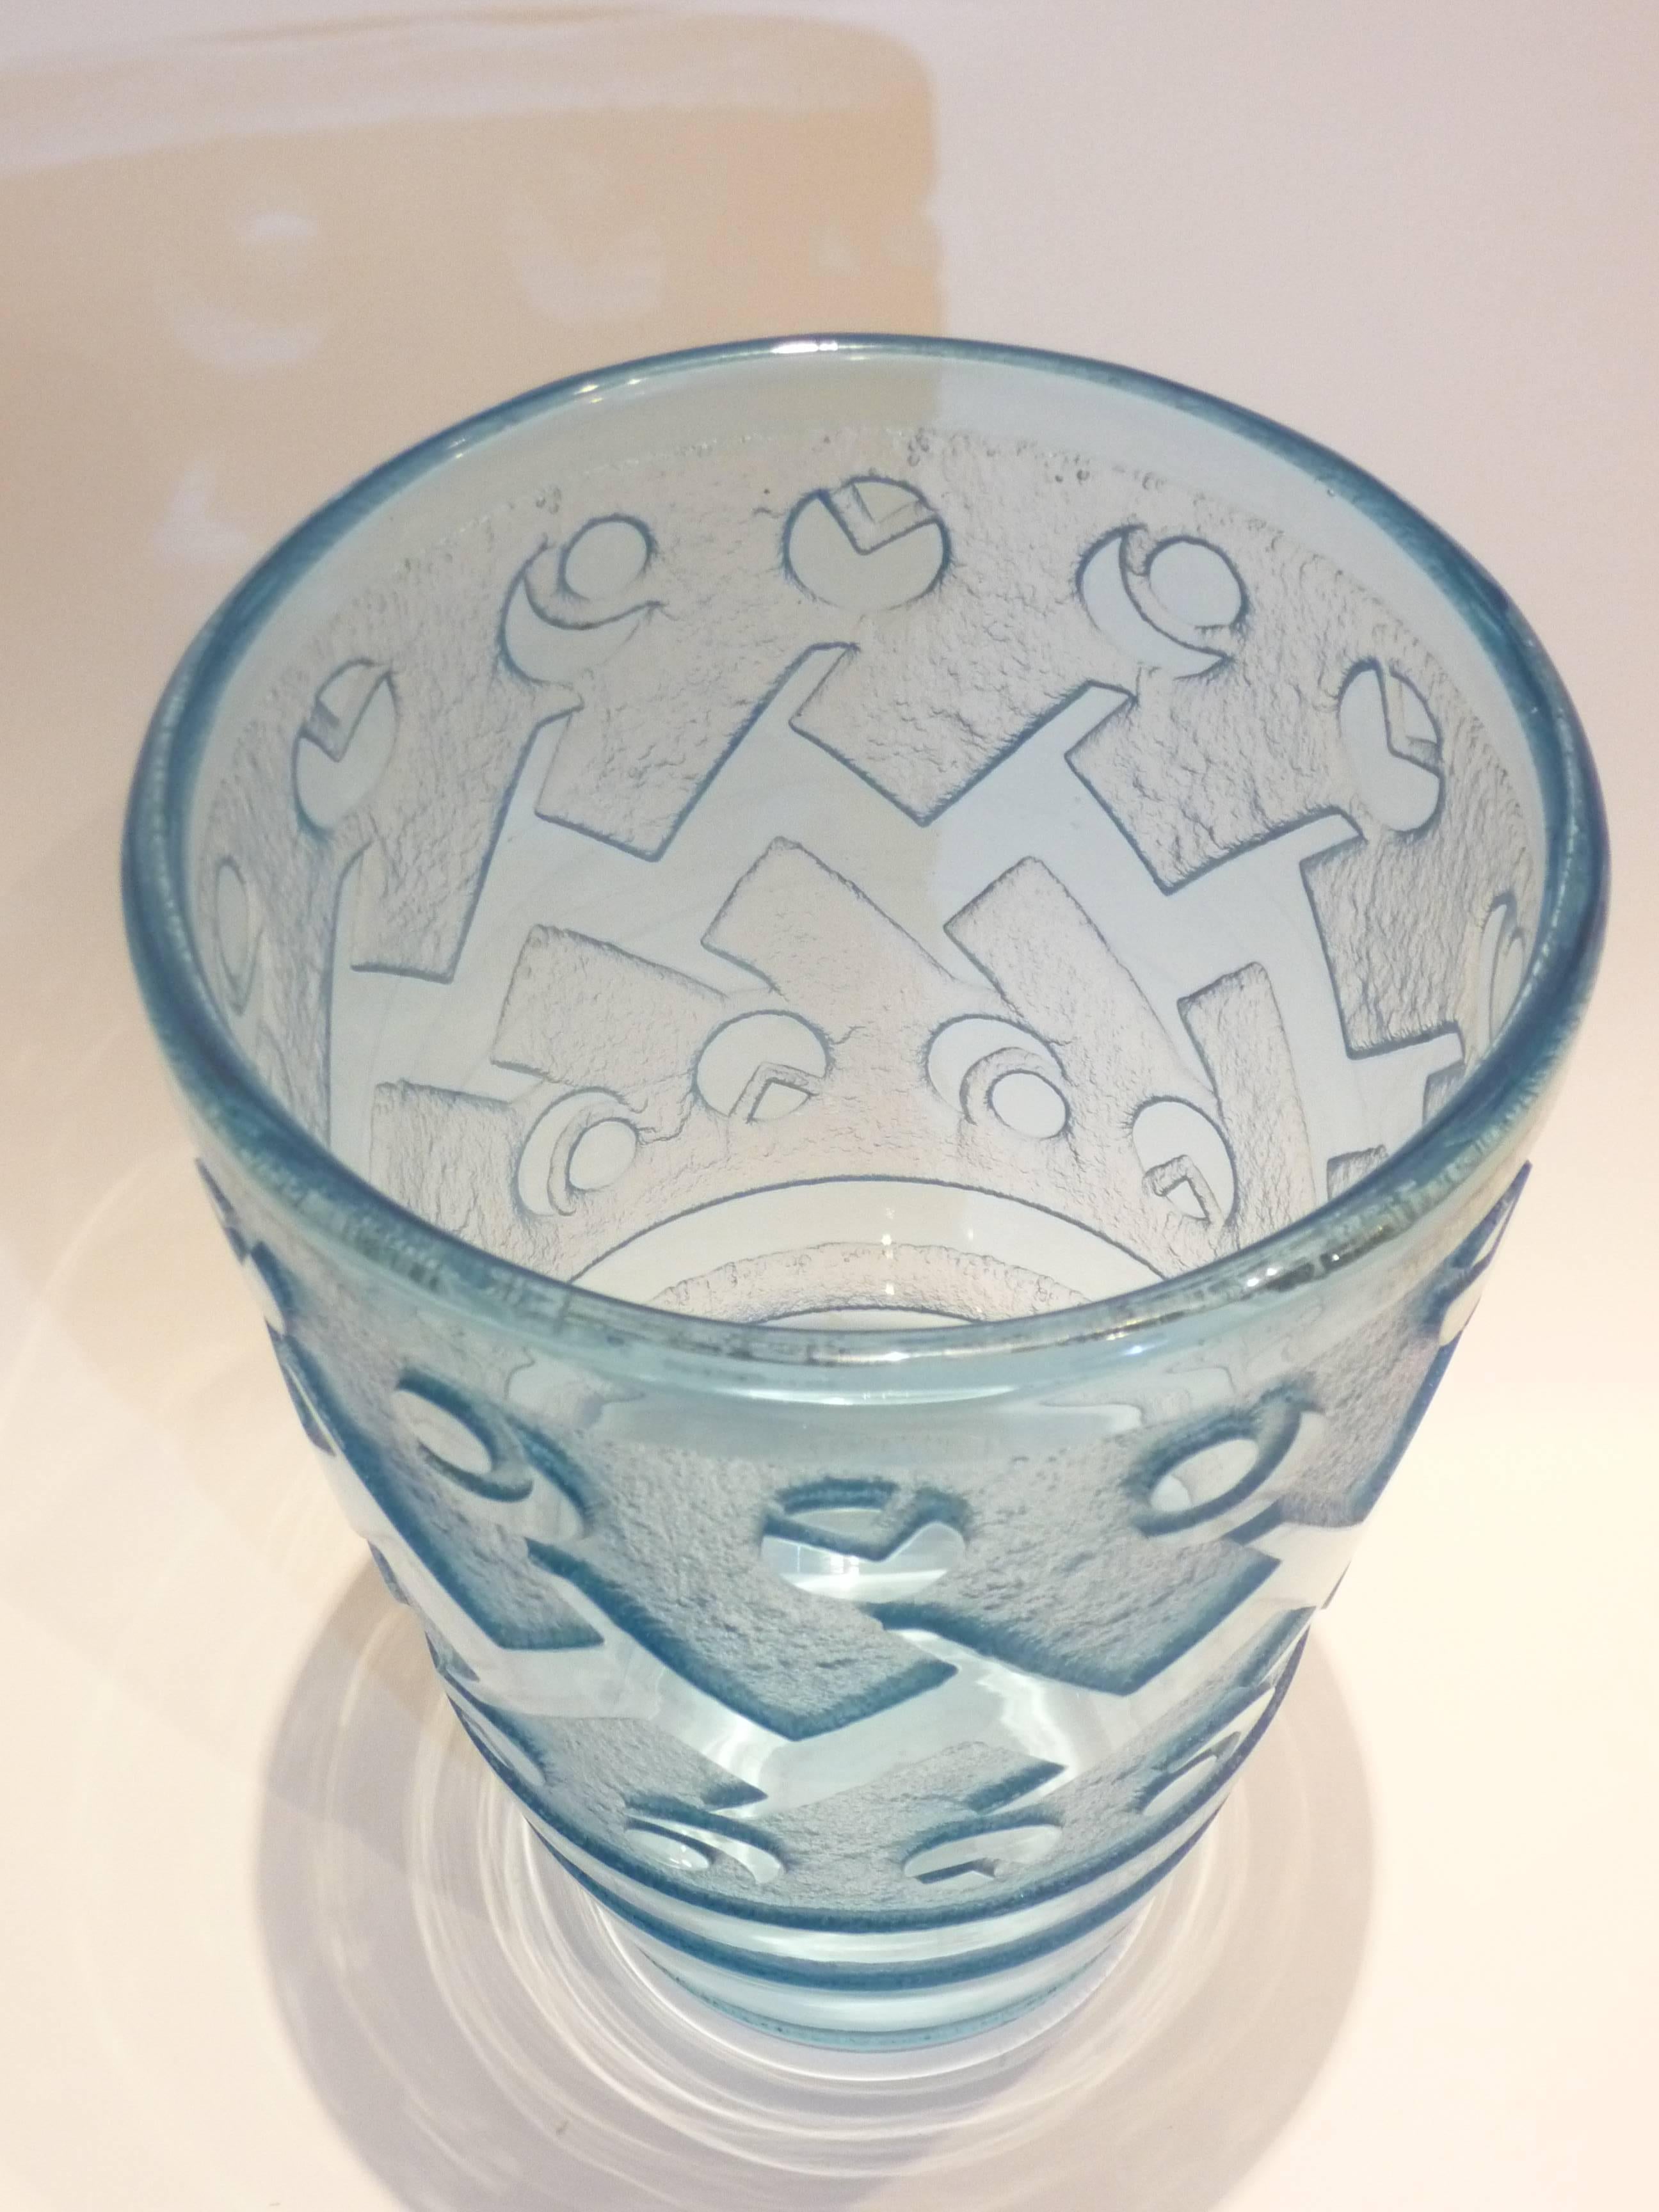 Daum Nancy
An Art Deco deeply acid etched vase with geometric decoration
Wheel-cut signature.